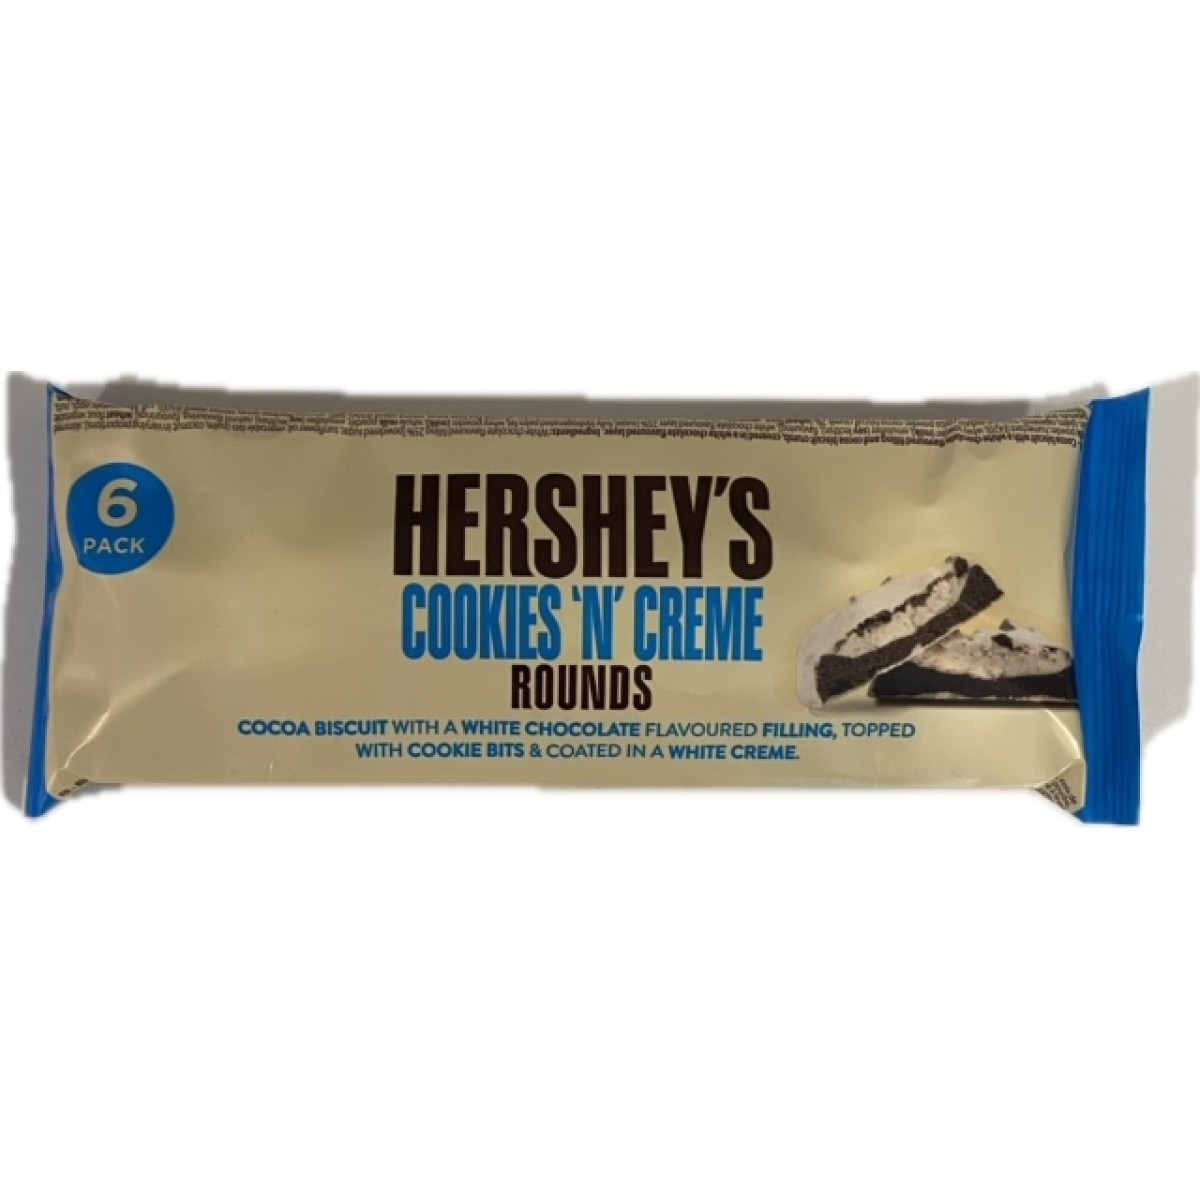 Hershey's cookies creme